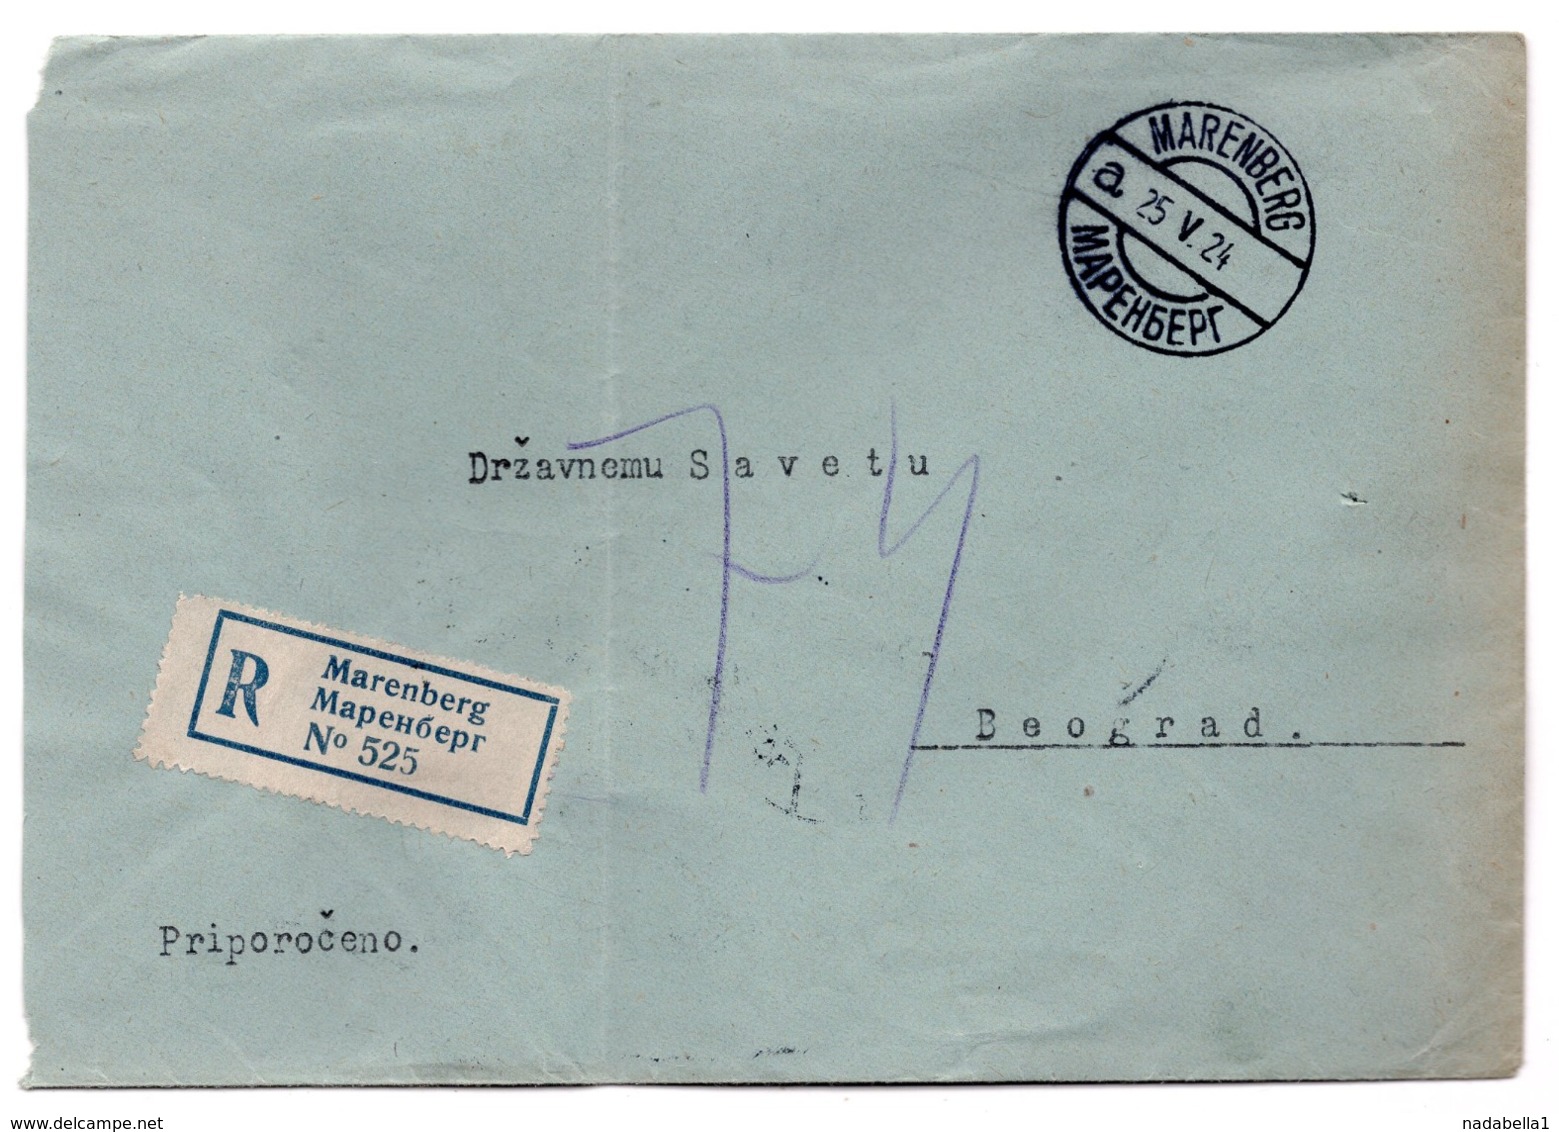 1924 YUGOSLAVIA, SLOVENIA, MARENBERG, RADLJE OB DRAVI, TO BELGRADE, SERBIA, RECORDED MAIL, 12 STAMPS - Covers & Documents